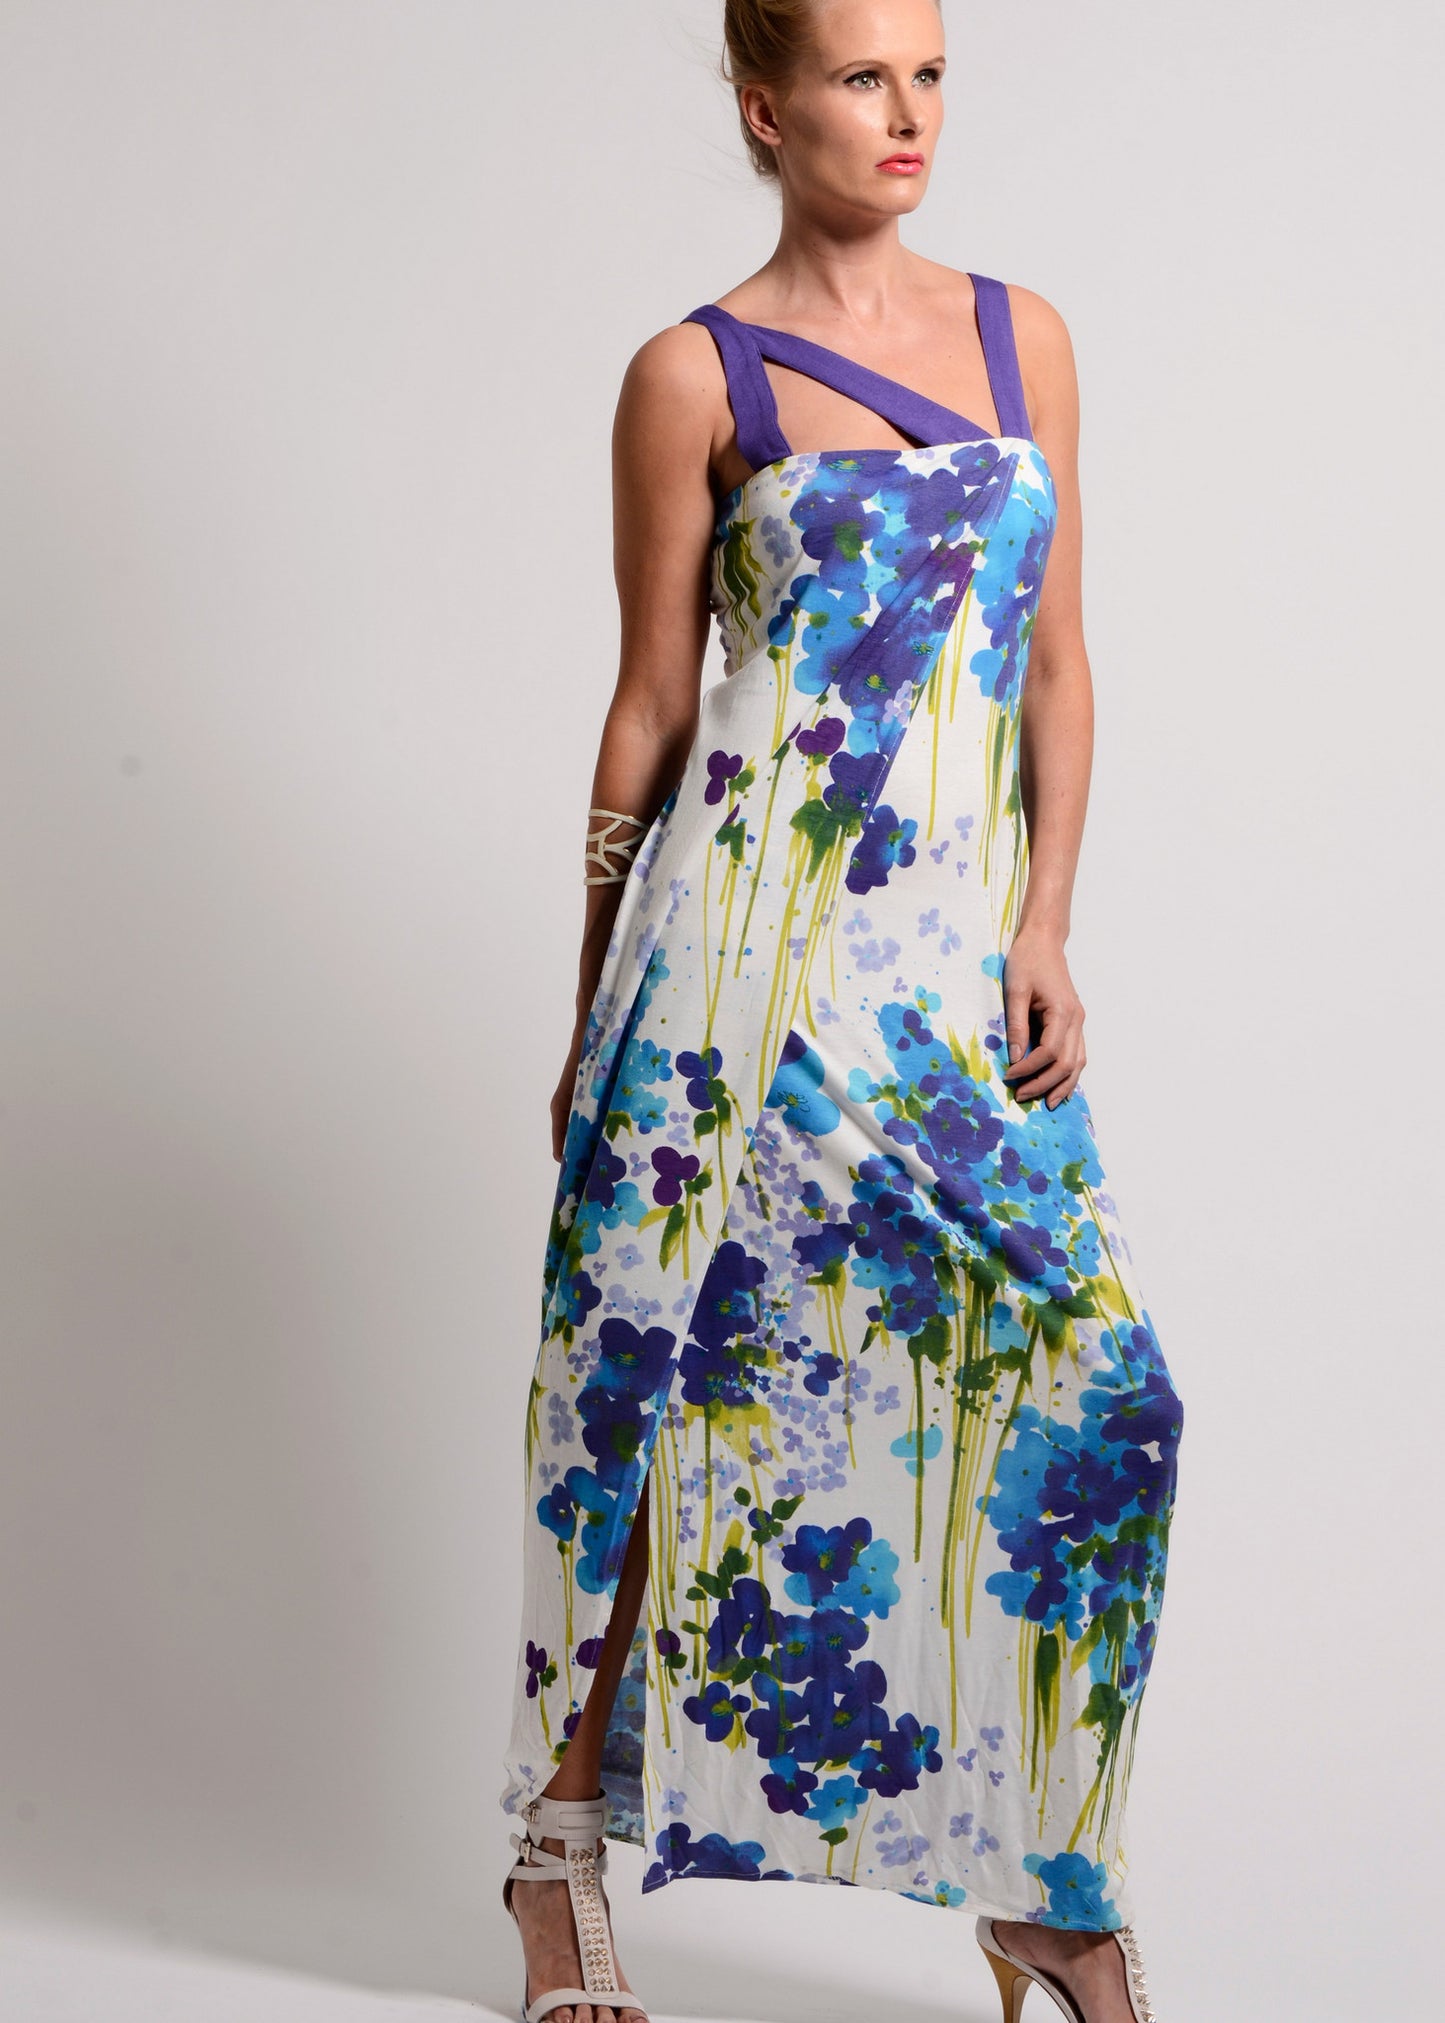 Liz - Floral print maxi dress- SOLD OUT